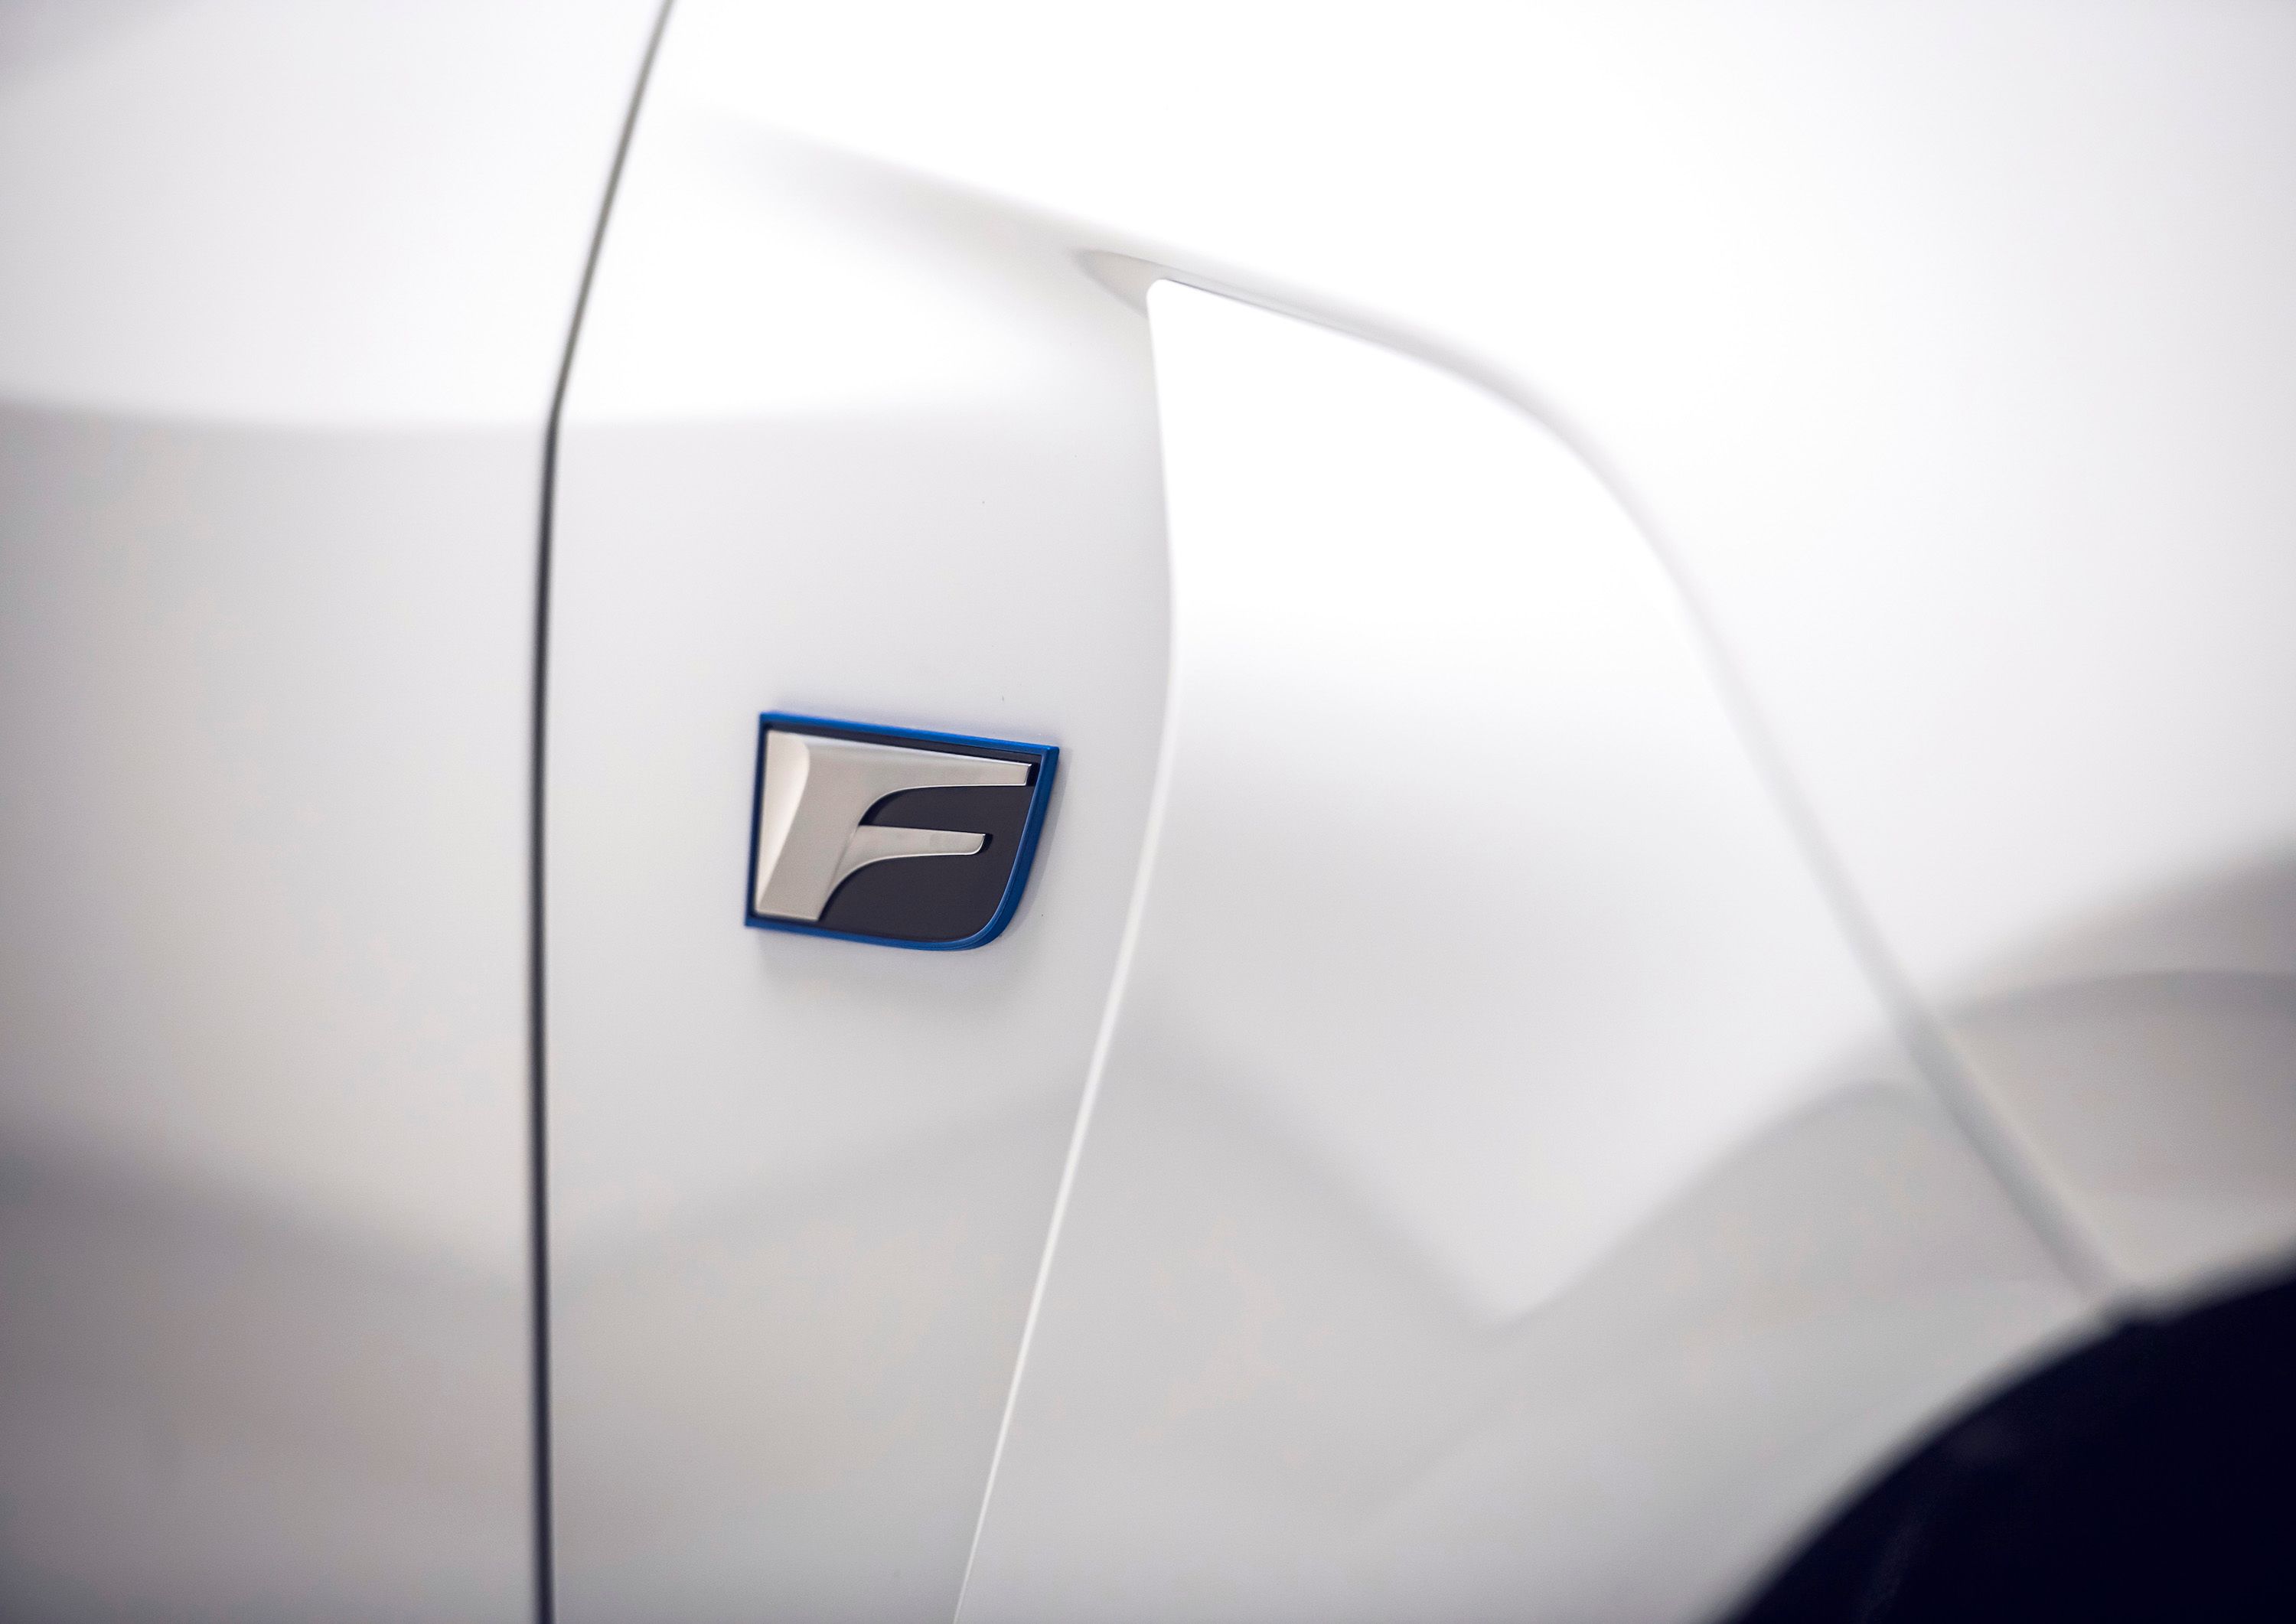 2020 Lexus RC F Track Edition